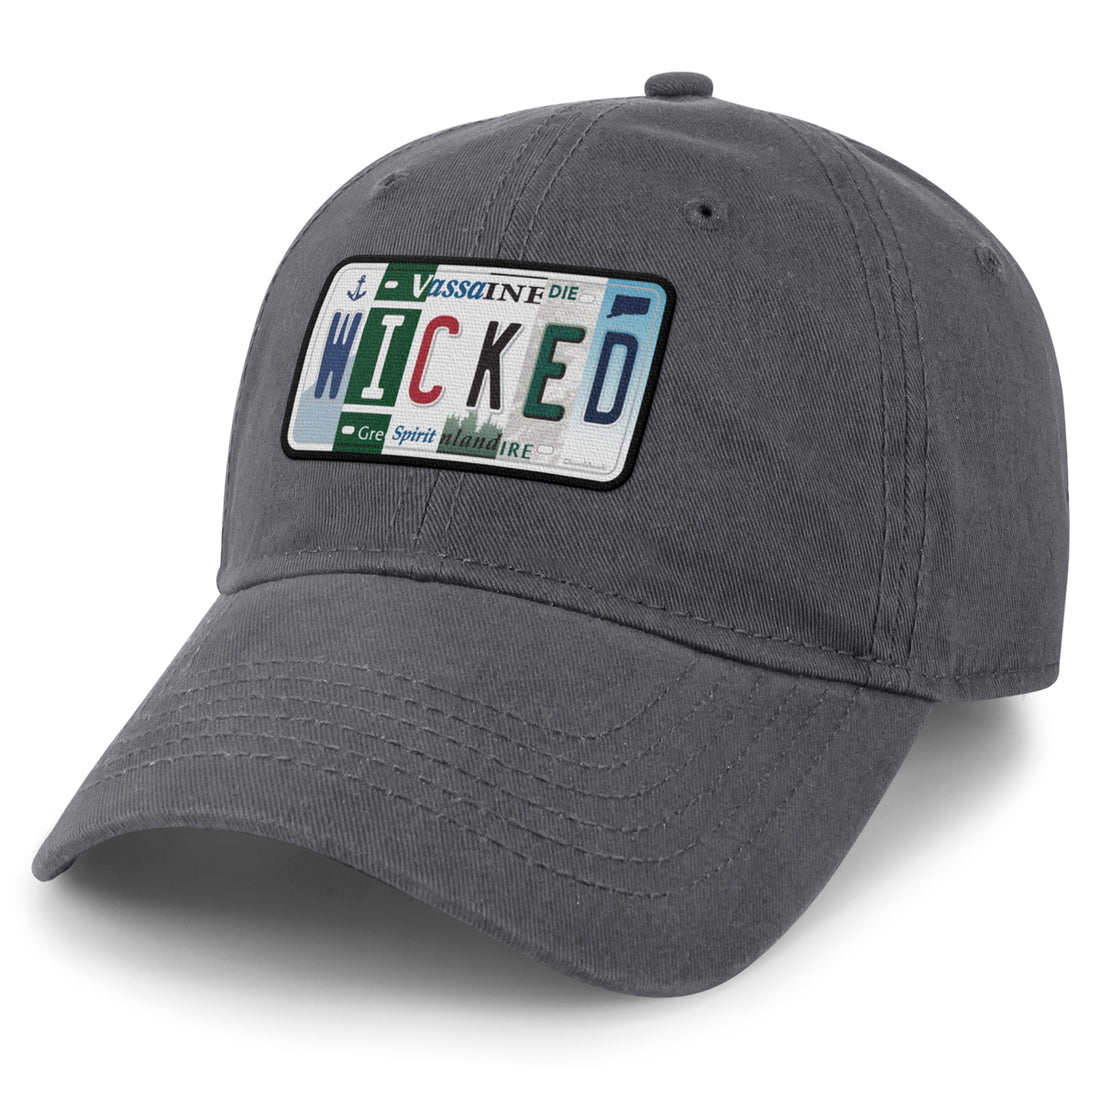 Wicked License Plate Dad Hat - Chowdaheadz